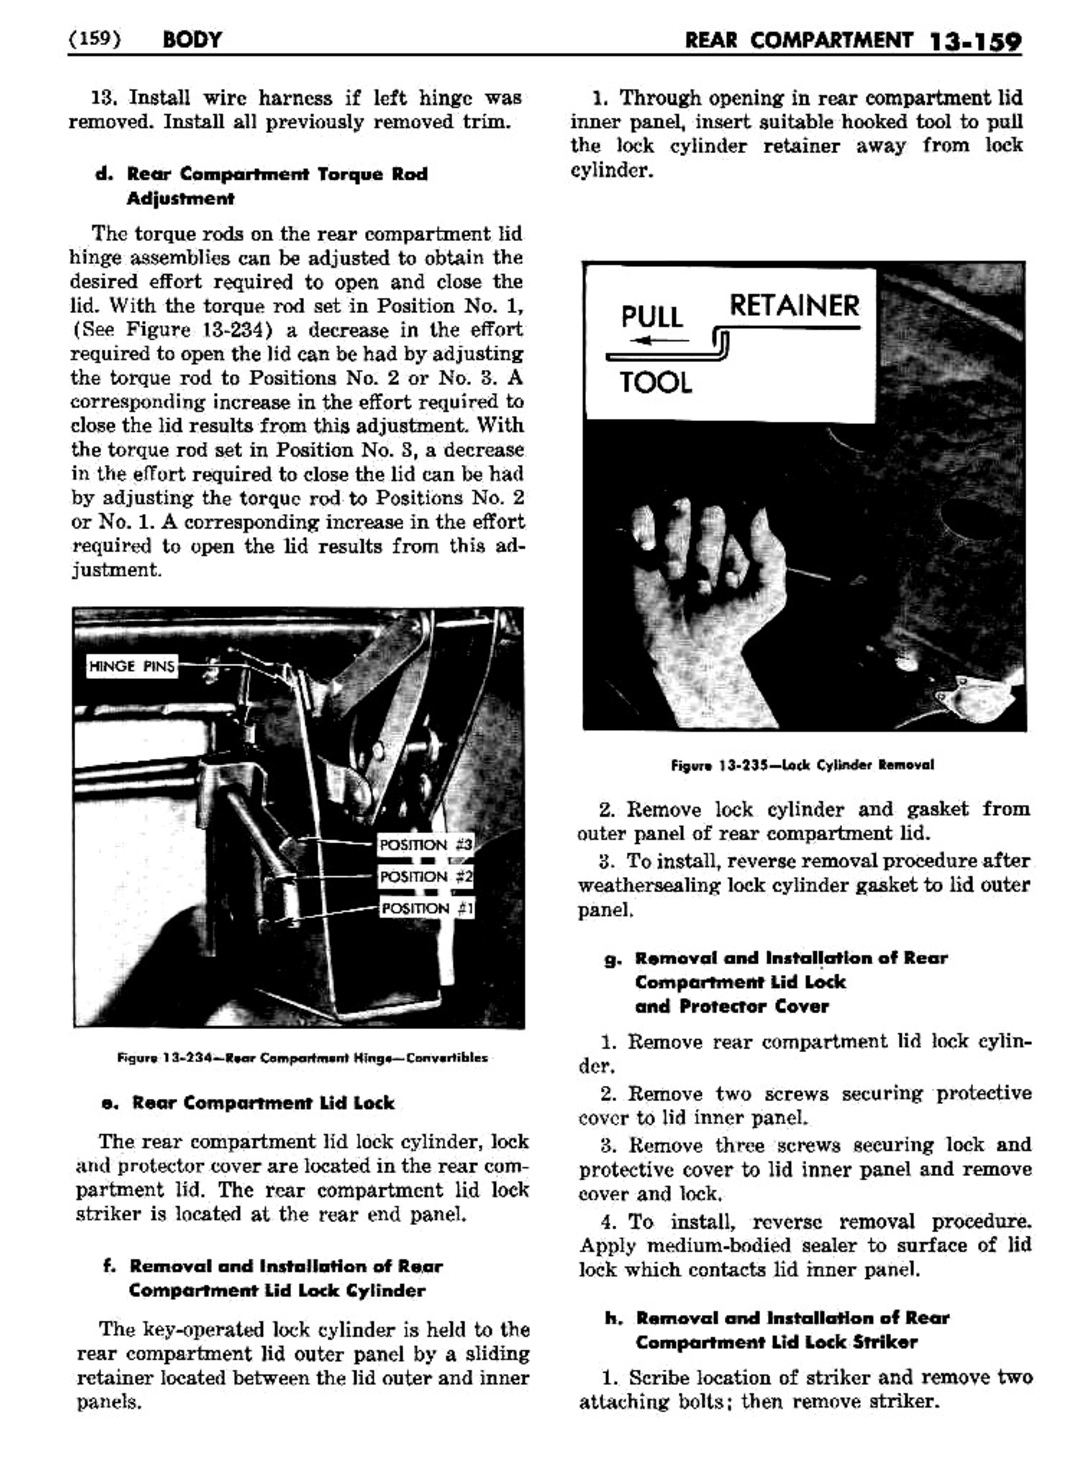 n_1957 Buick Body Service Manual-161-161.jpg